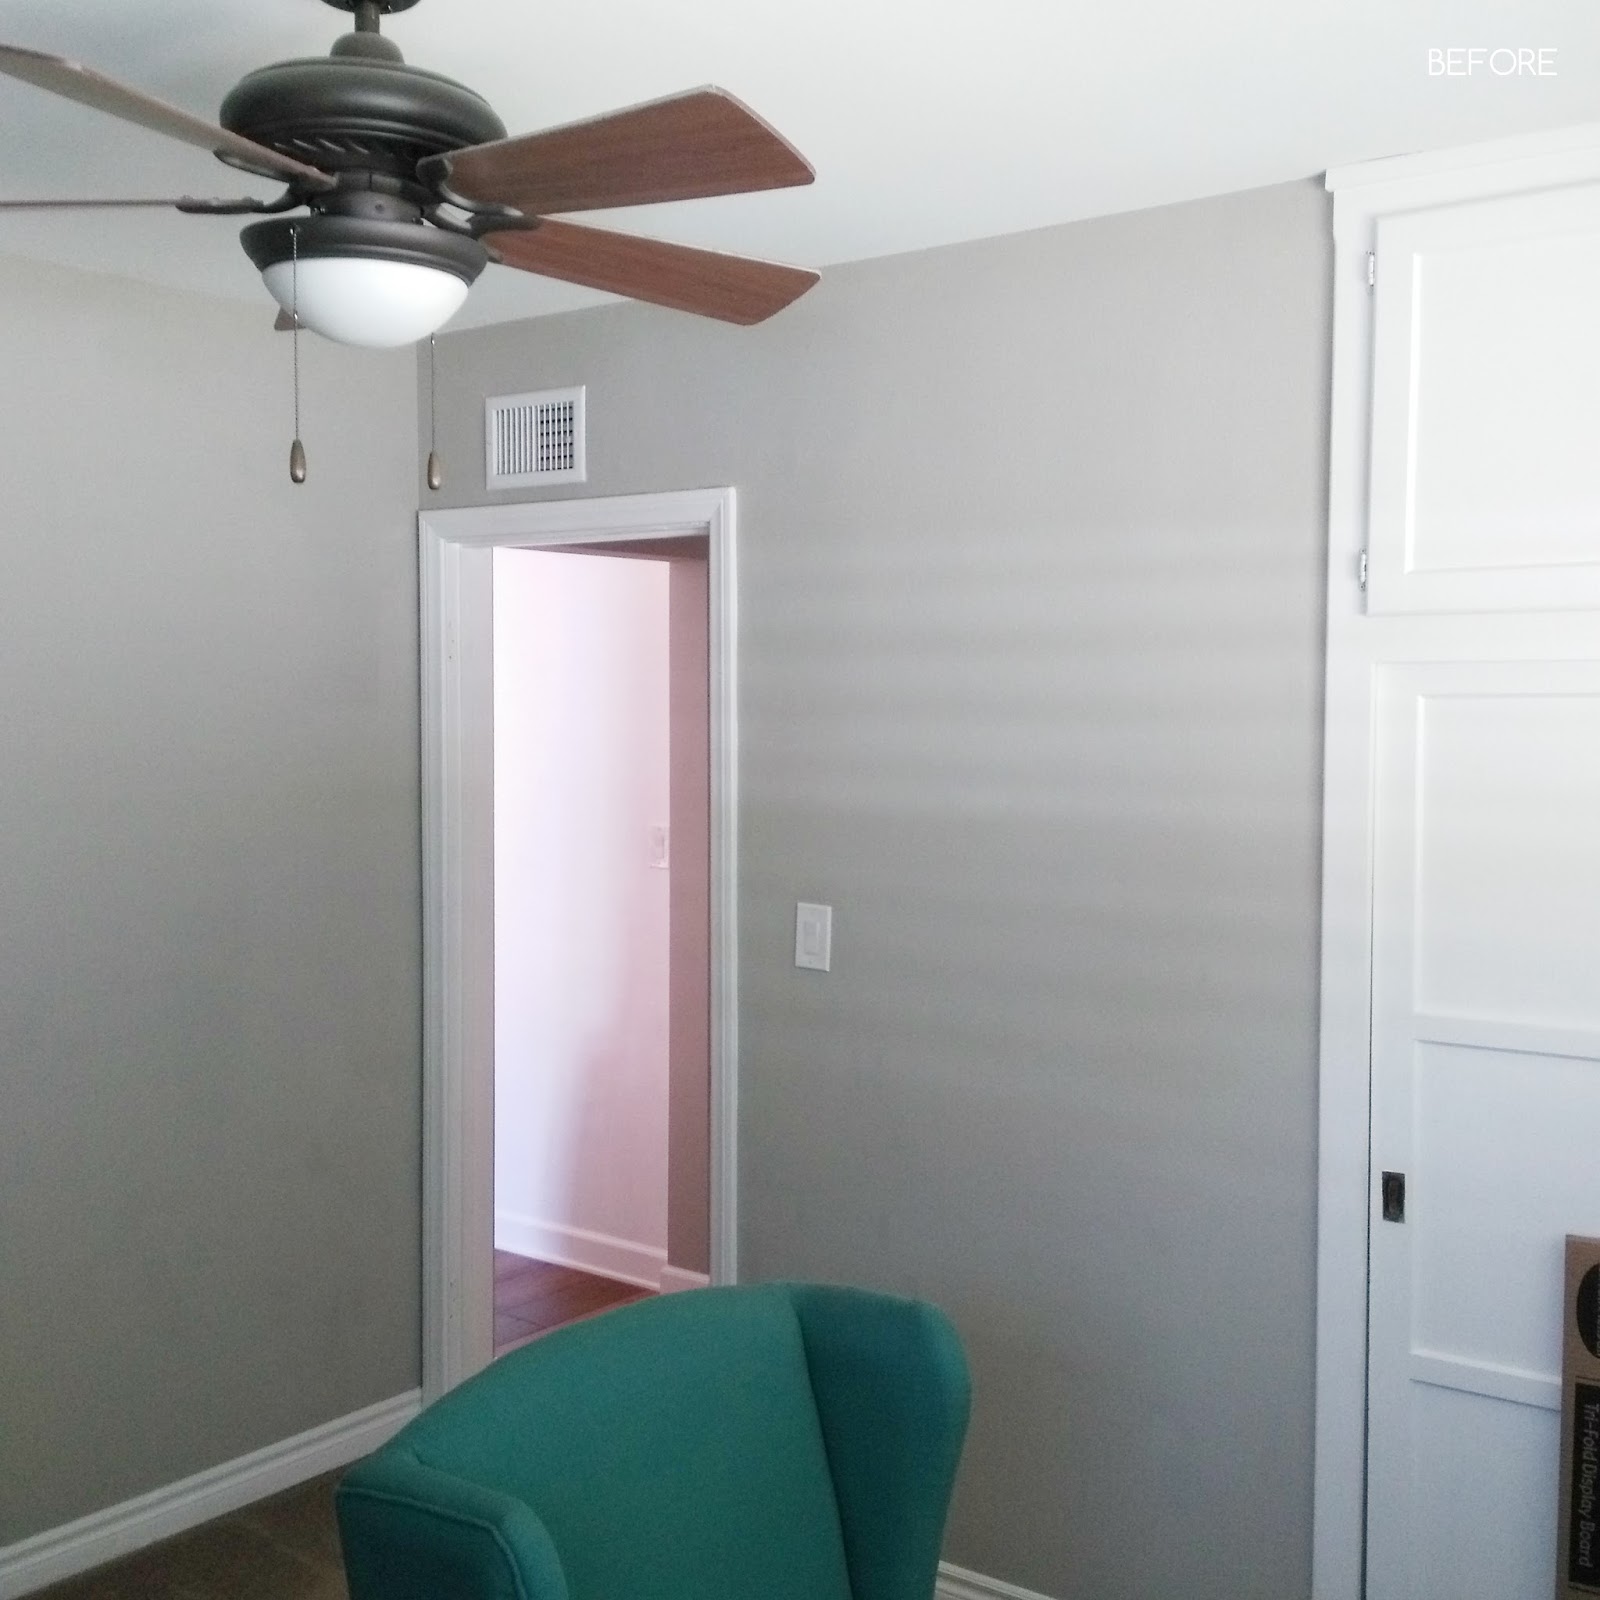 CAD Interiors Bedroom Study Lounge Makeover interior design home improvement